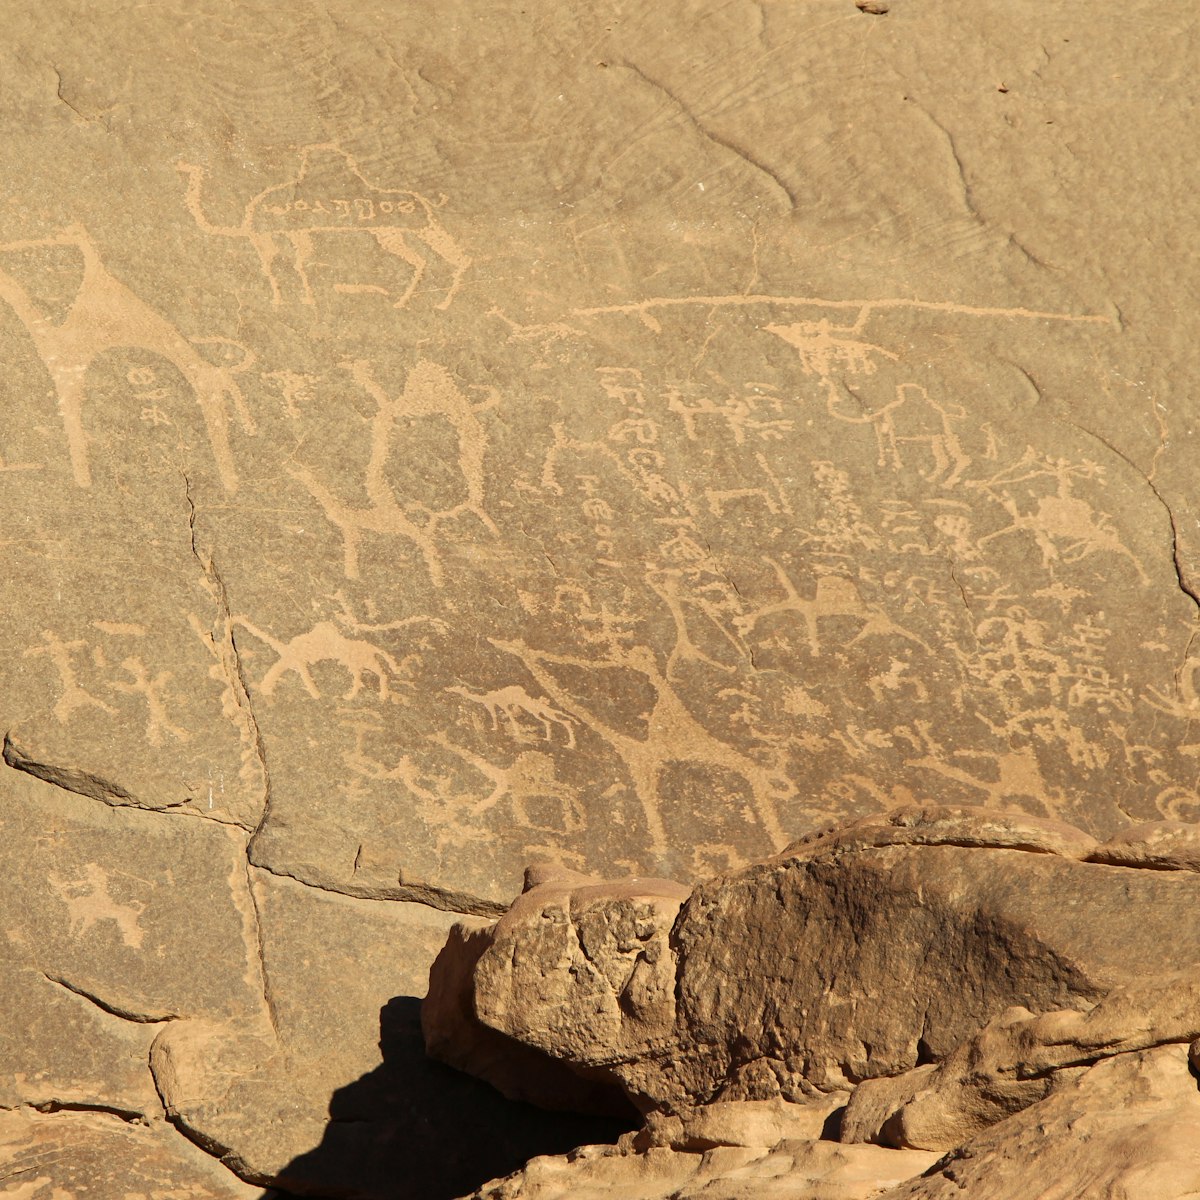 Petroglyphs (Alameleh inscriptions) of a caravan of camels on the sandstone rock in Wadi Rum desert in Jordan.